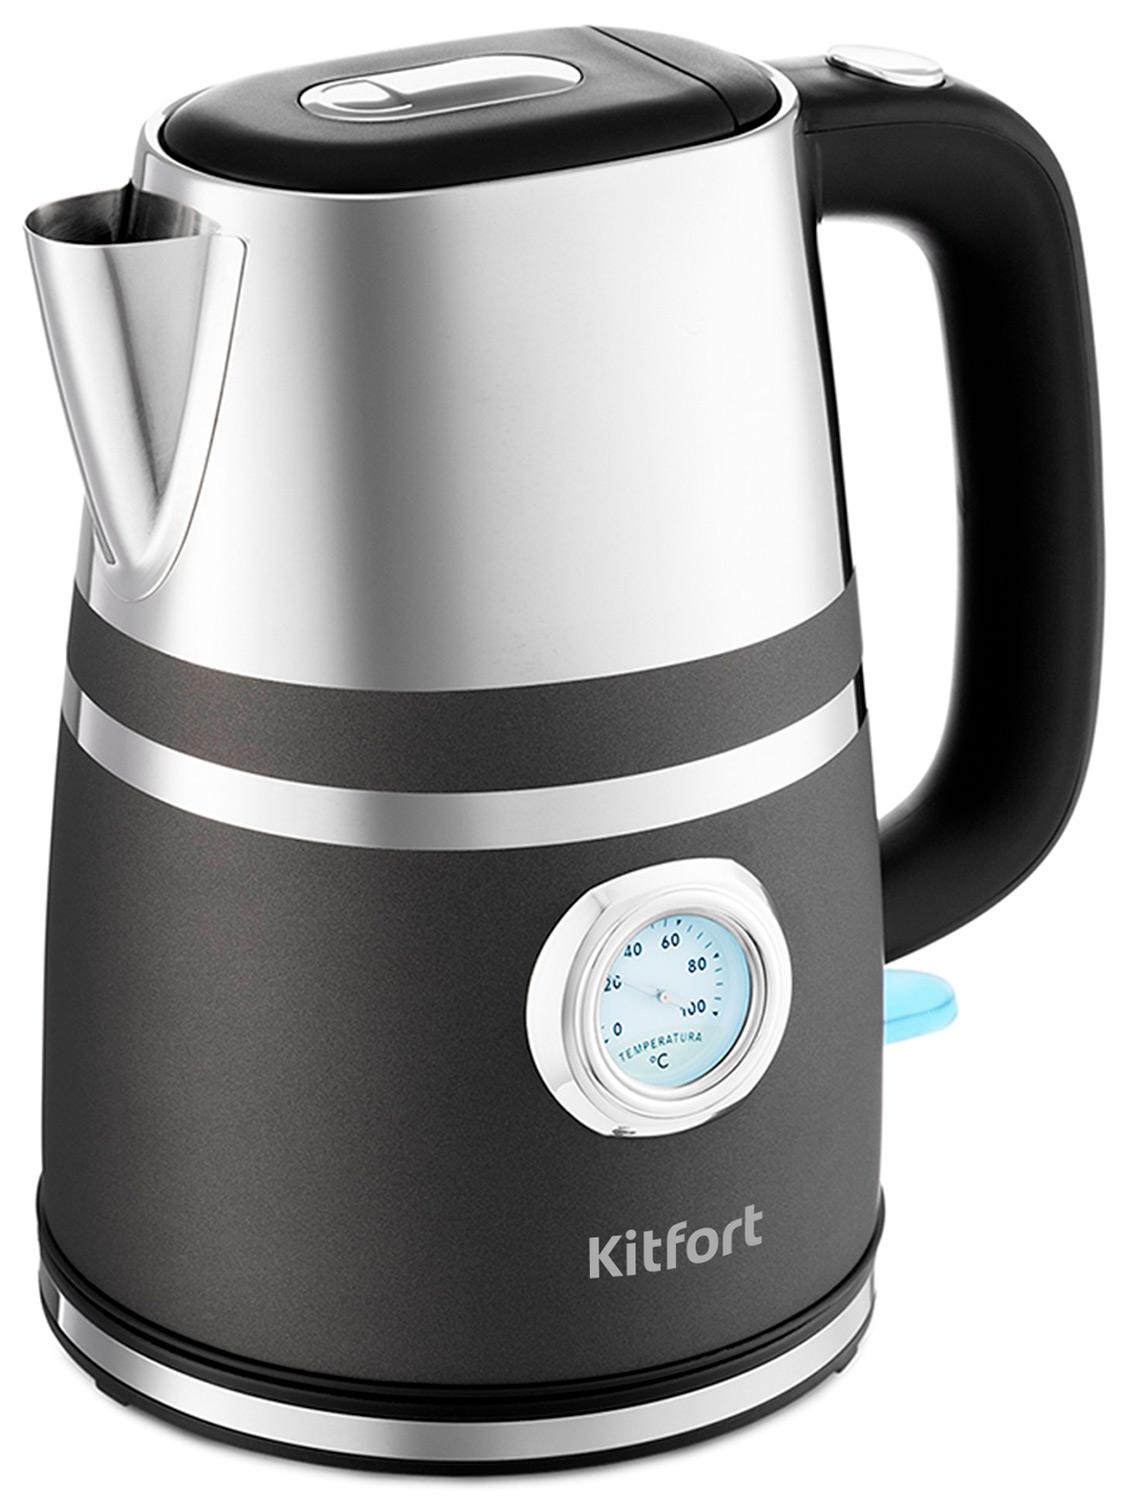 чайник kitfort kt 670 1 graphite 1 шт Чайник электрический Kitfort KT-670-1, графит